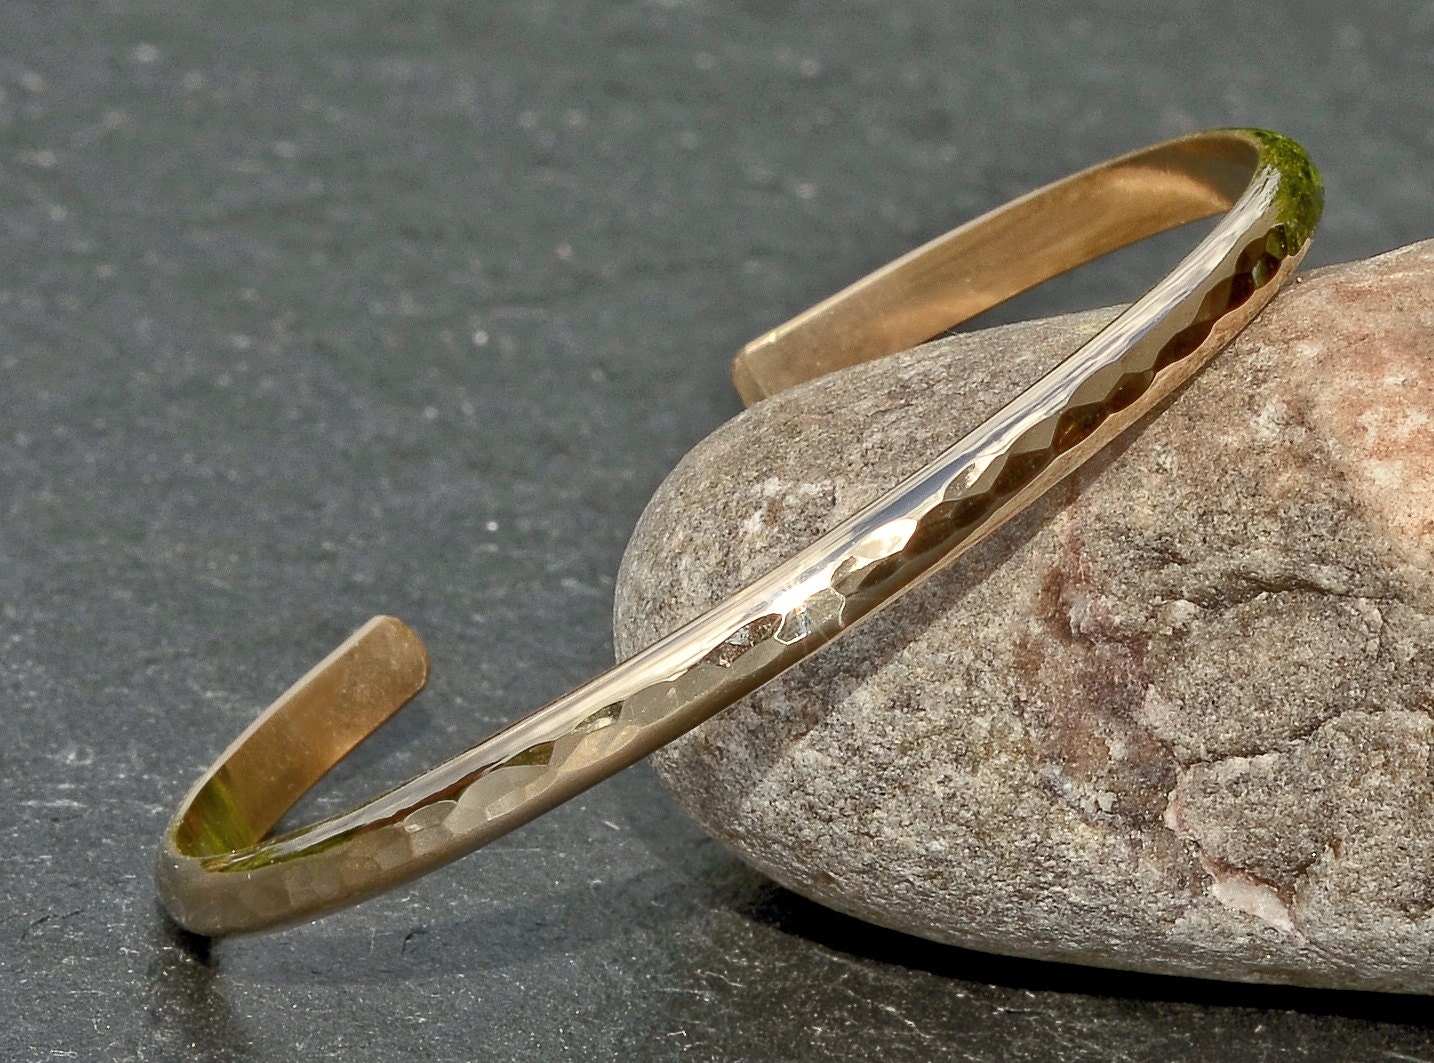 Monogram Cuff bracelet - Custom engraved in various widths 14k gold filled, Rose  gold filled or sterling silver Adjustable cuff bangle